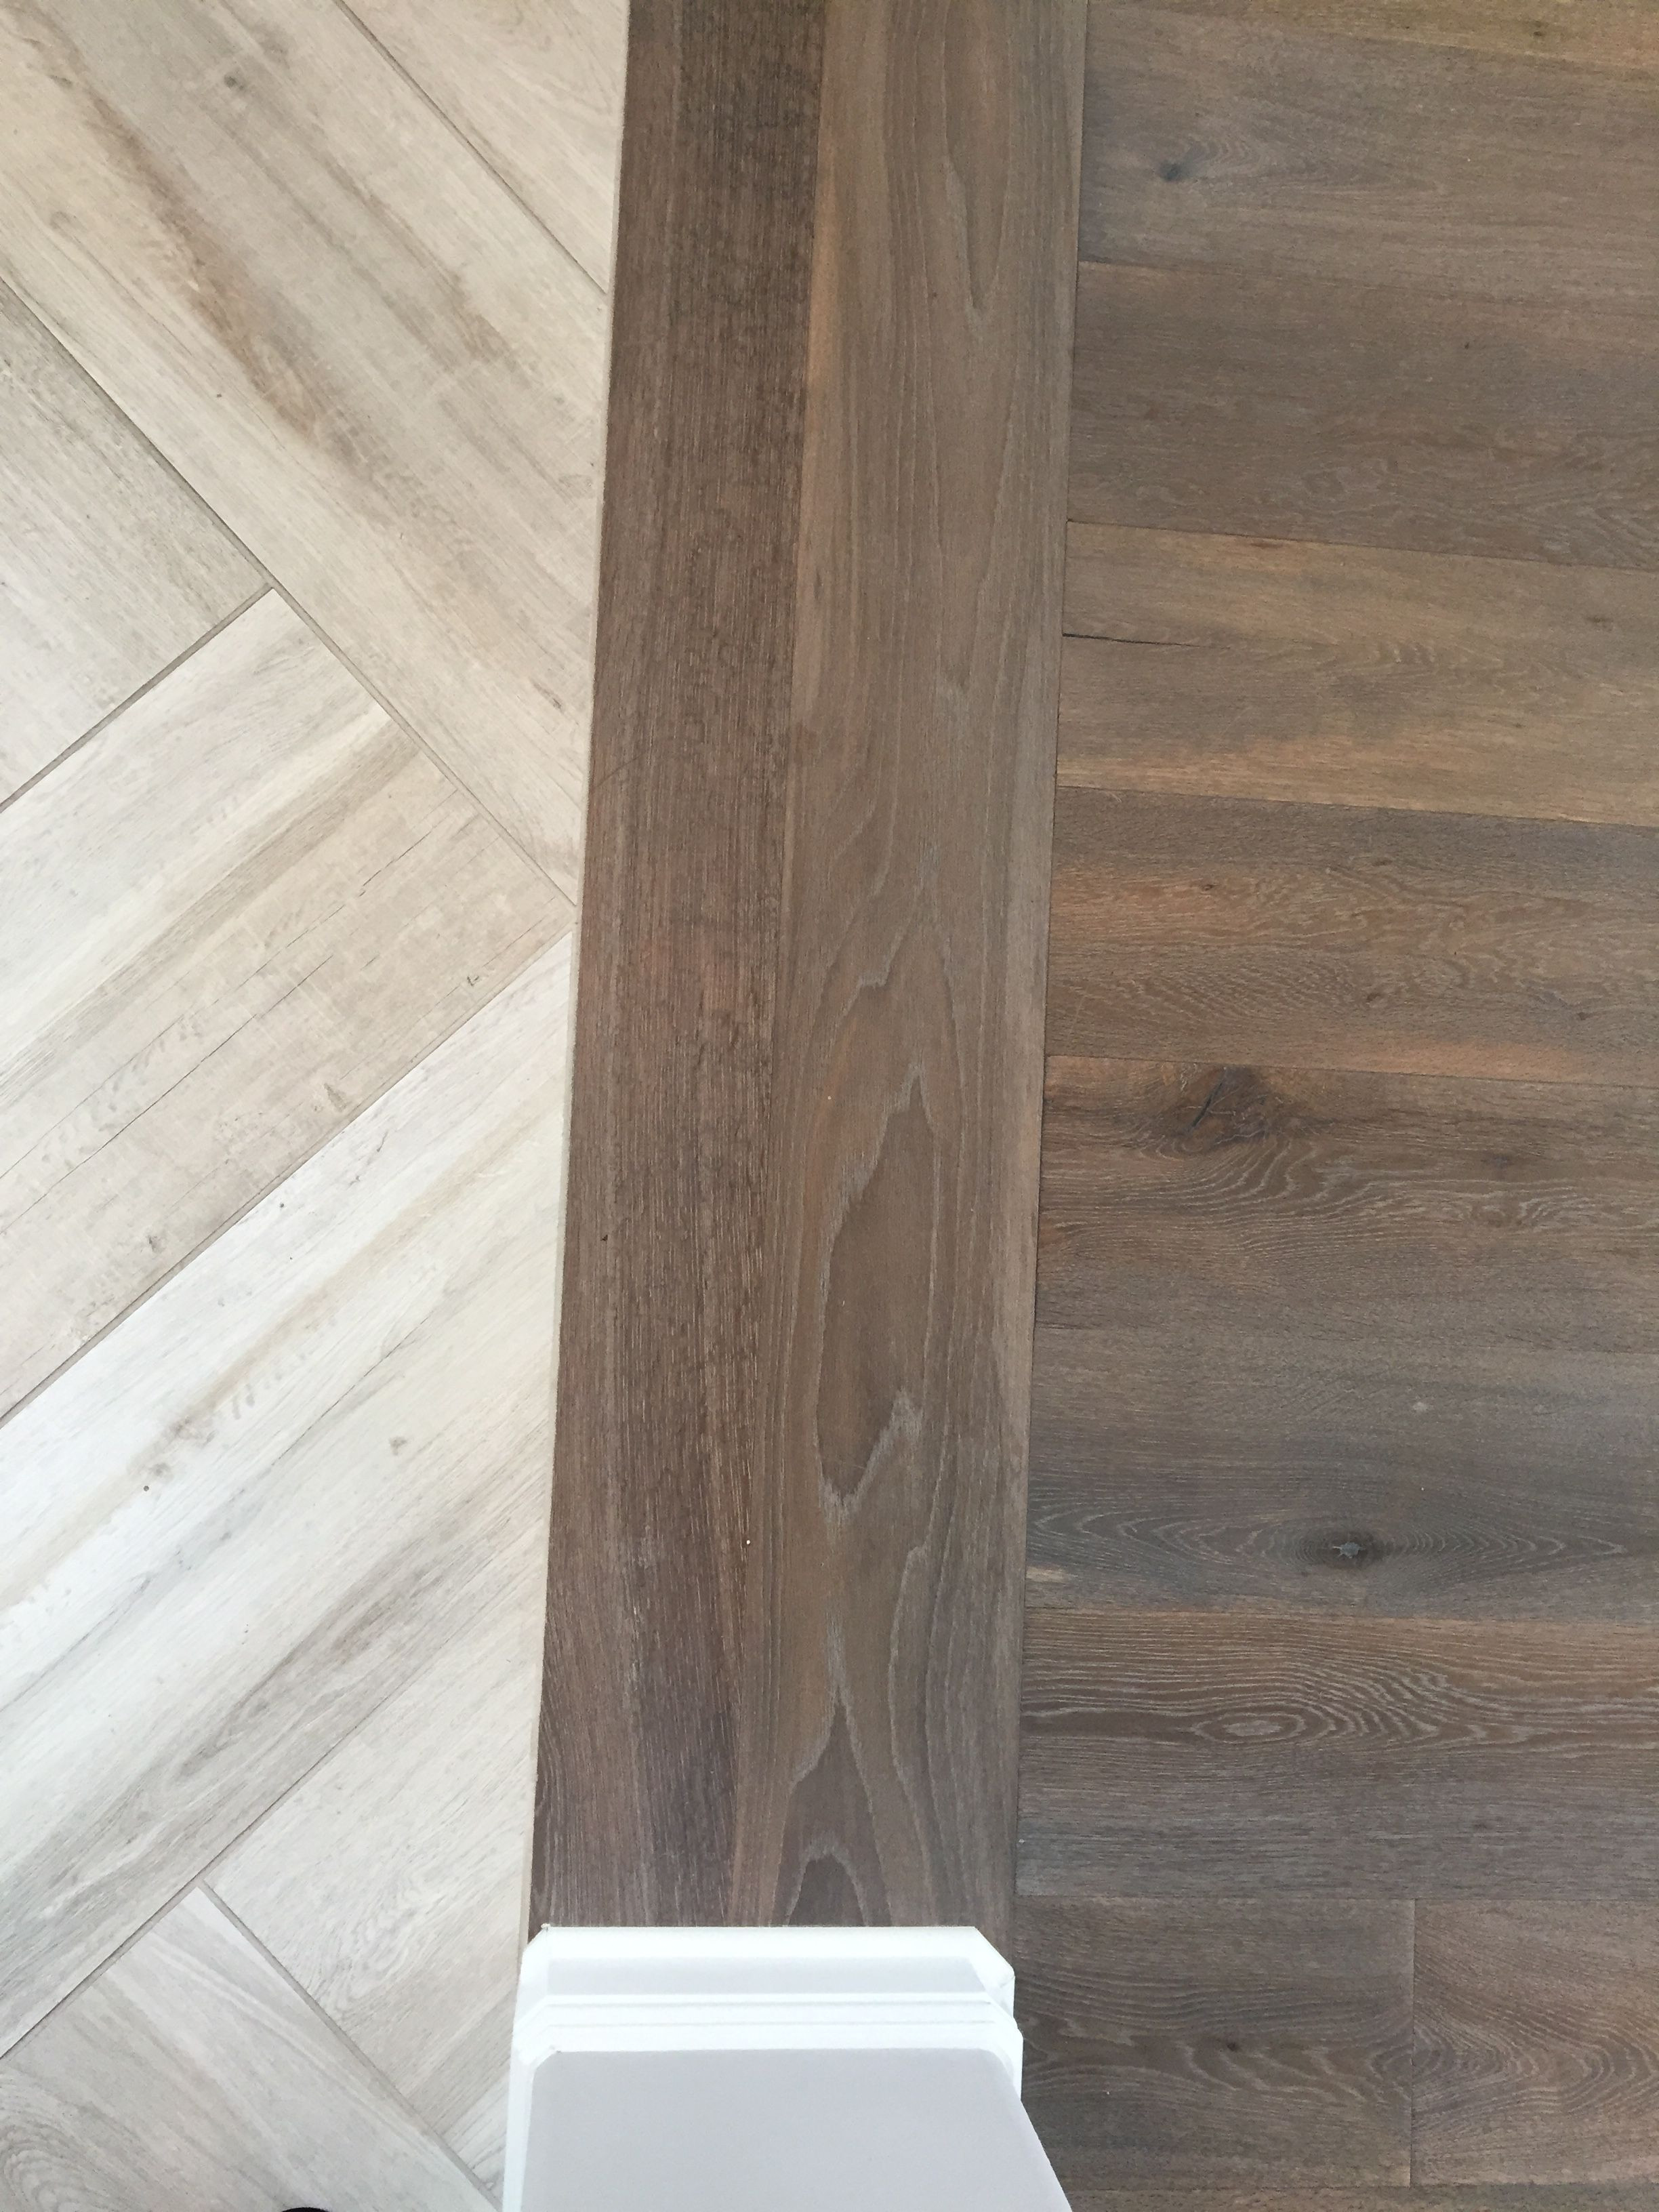 hardwood flooring saddle color of floor transition laminate to herringbone tile pattern model intended for floor transition laminate to herringbone tile pattern